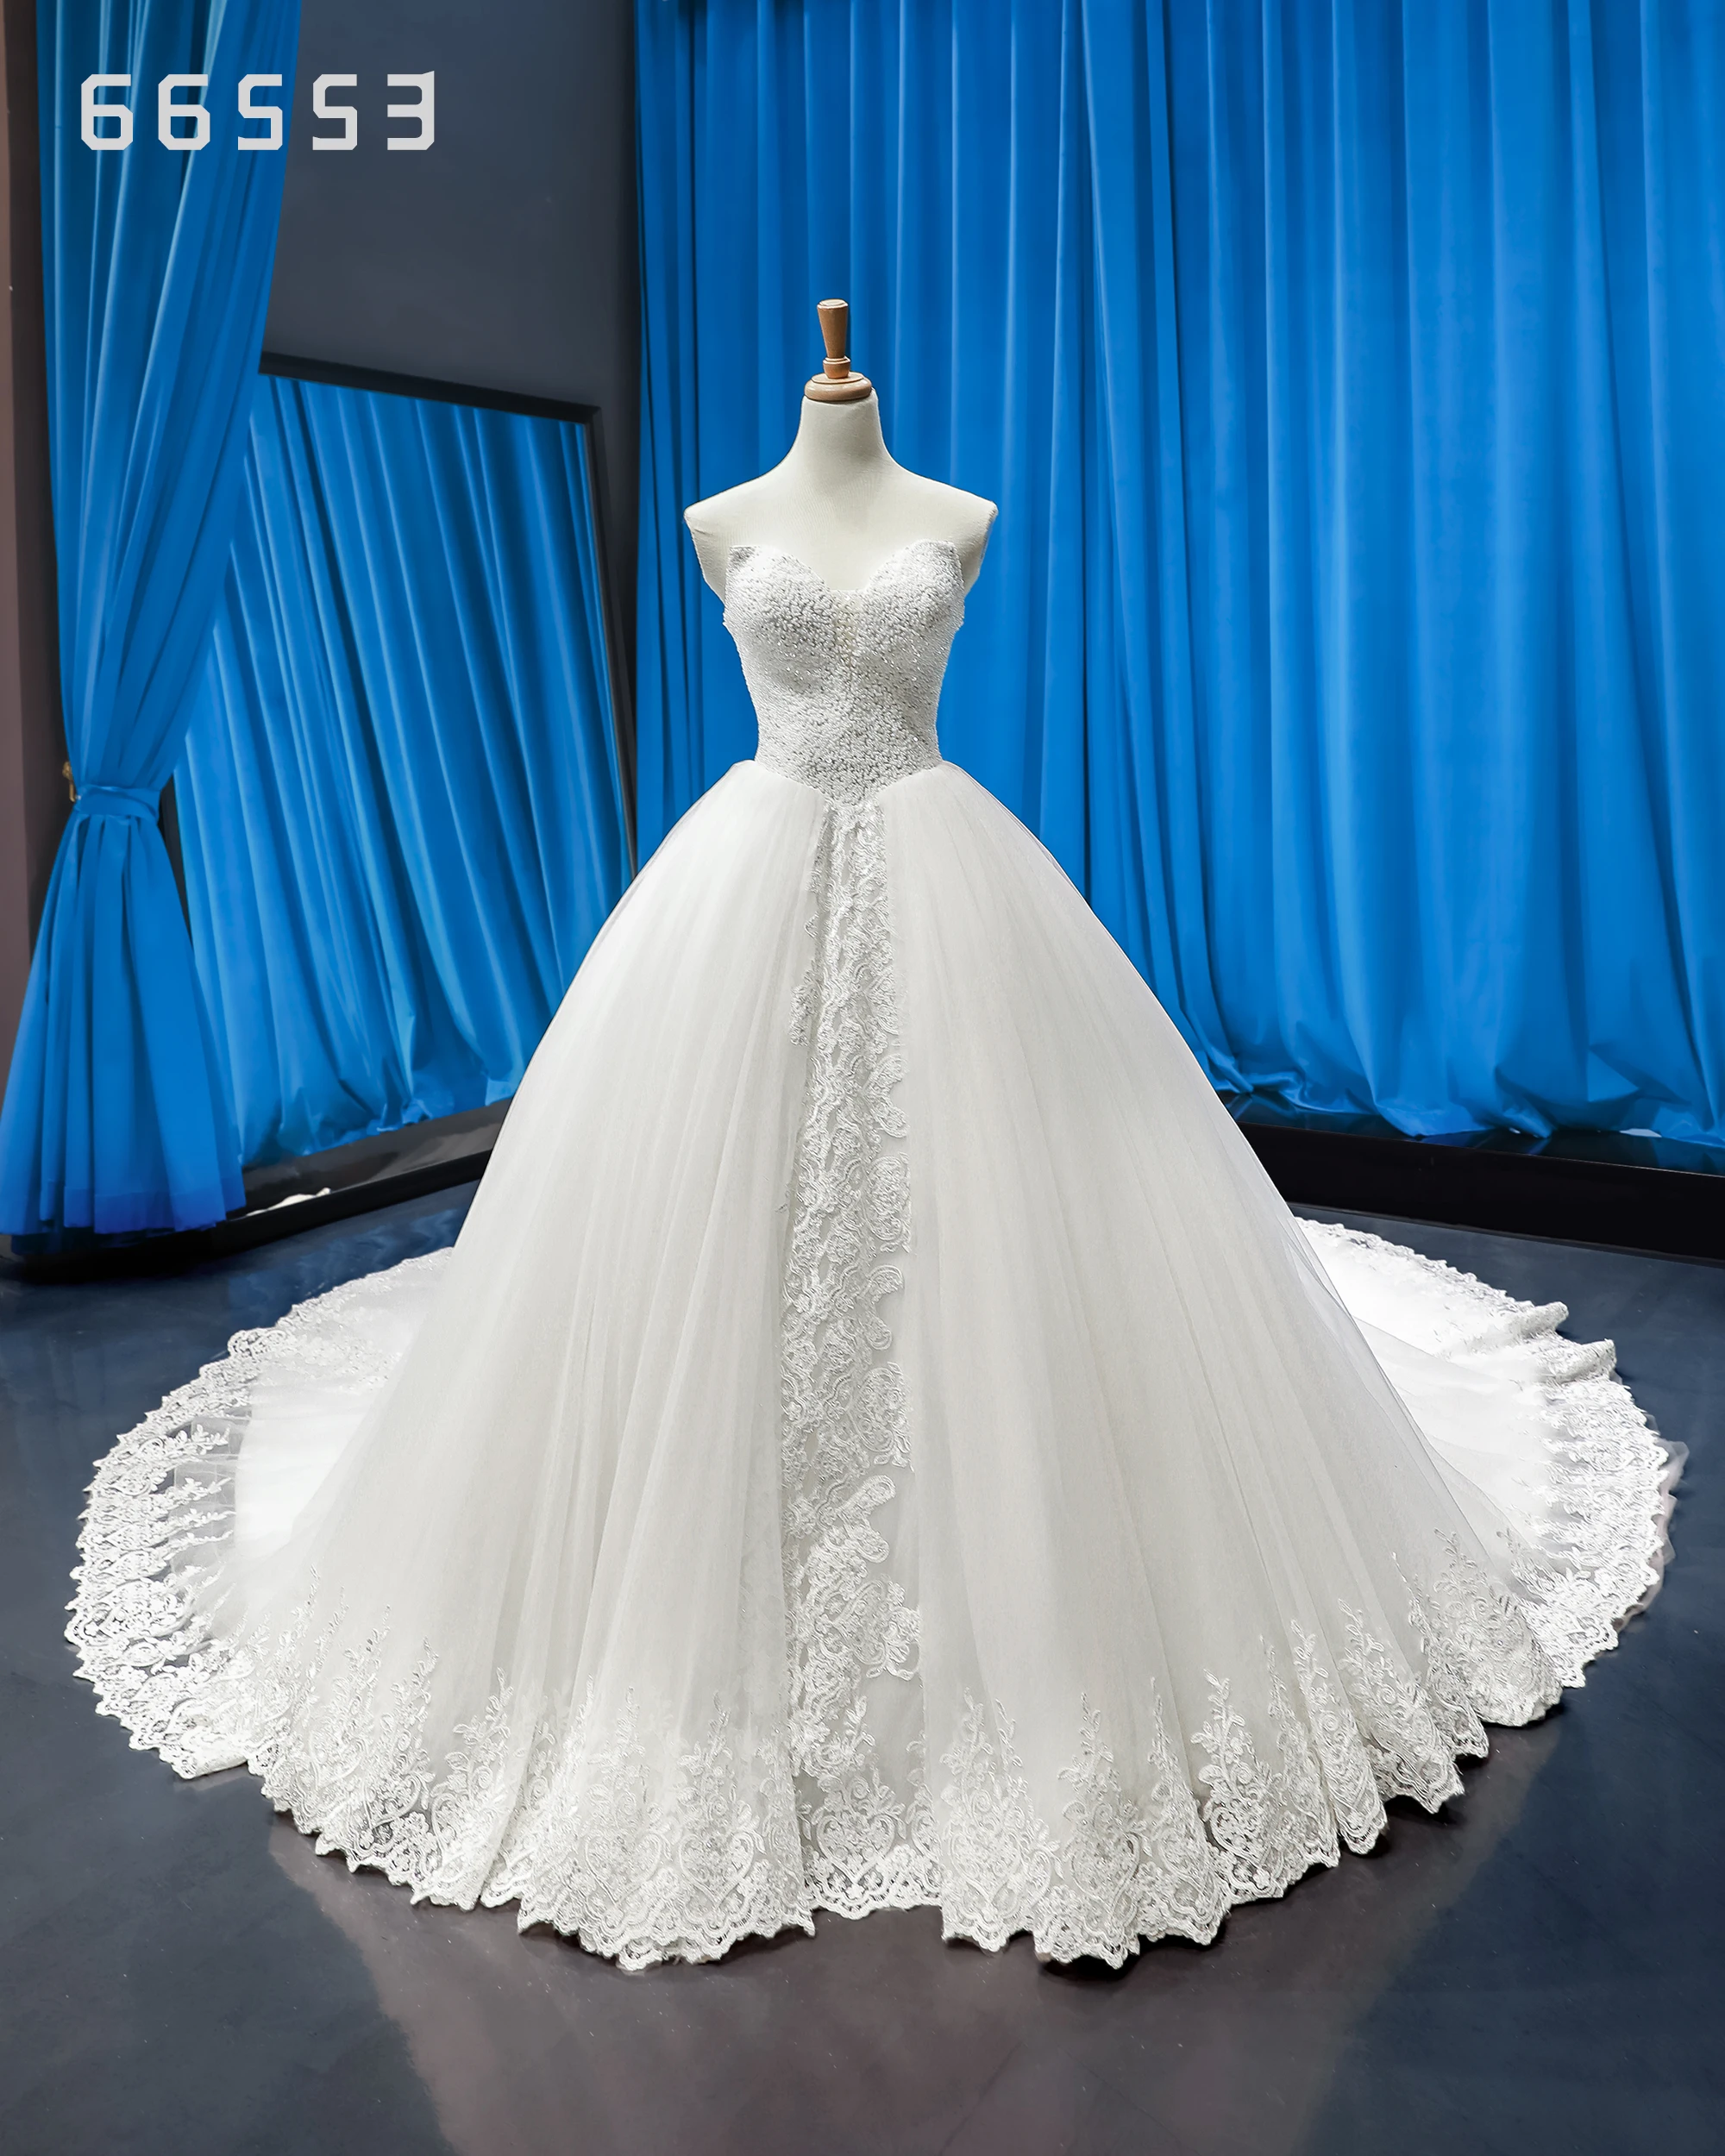 

Jancember RSM66553wholesale luxury dresses aliexpress beauty bridal wedding dressing gowns 2019 china latest design